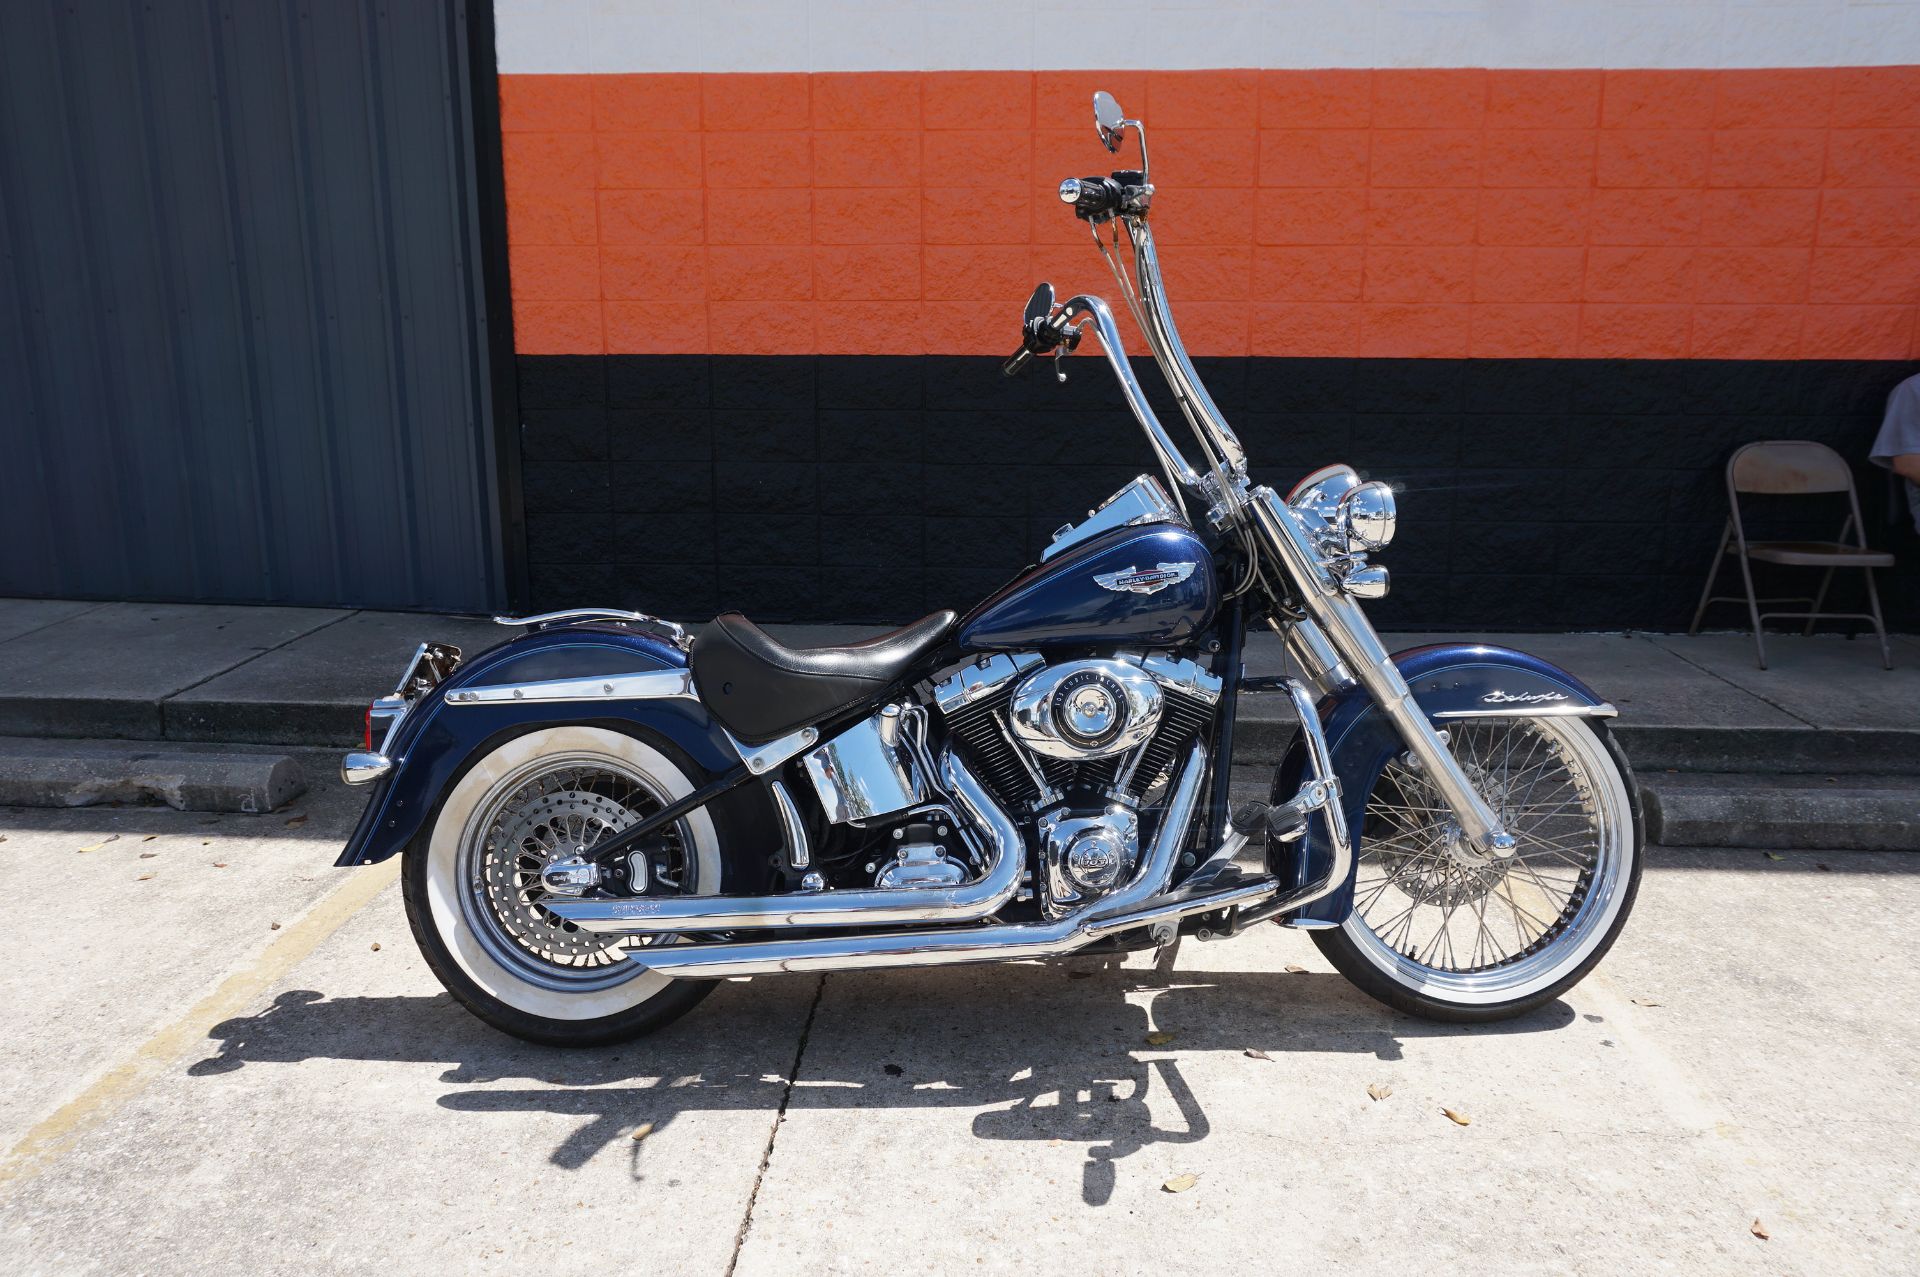 2012 Harley-Davidson Softail® Deluxe in Metairie, Louisiana - Photo 1